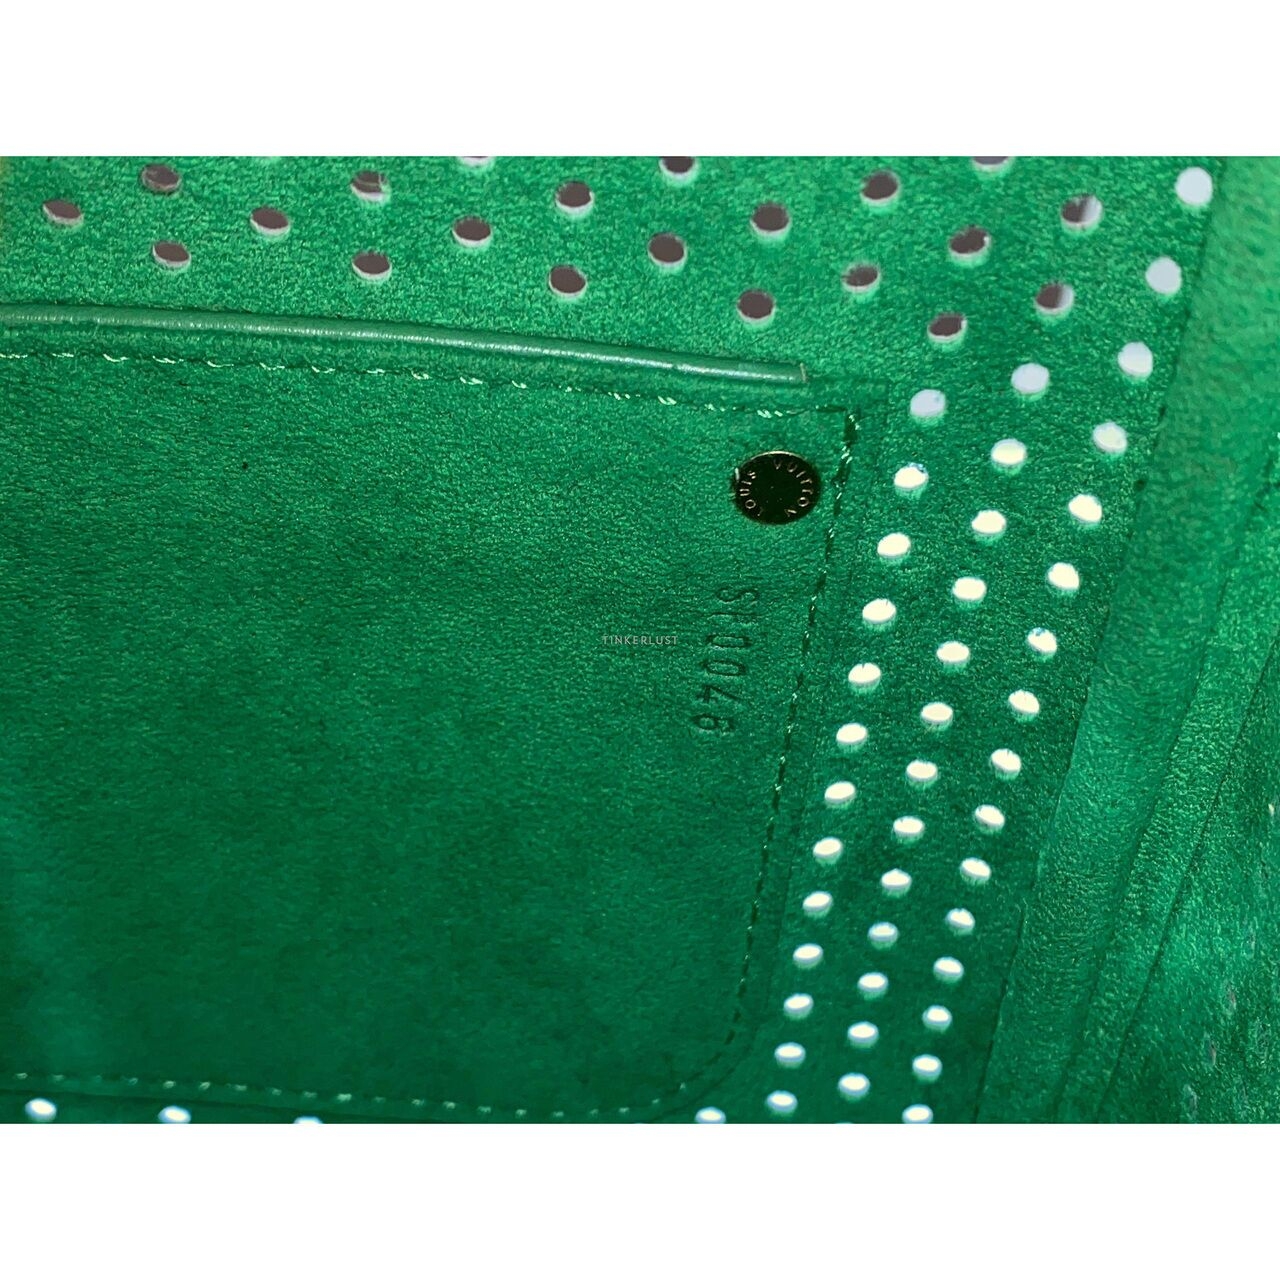 Louis Vuitton Speedy 30 Perforated Green GHW 2006 Handbag